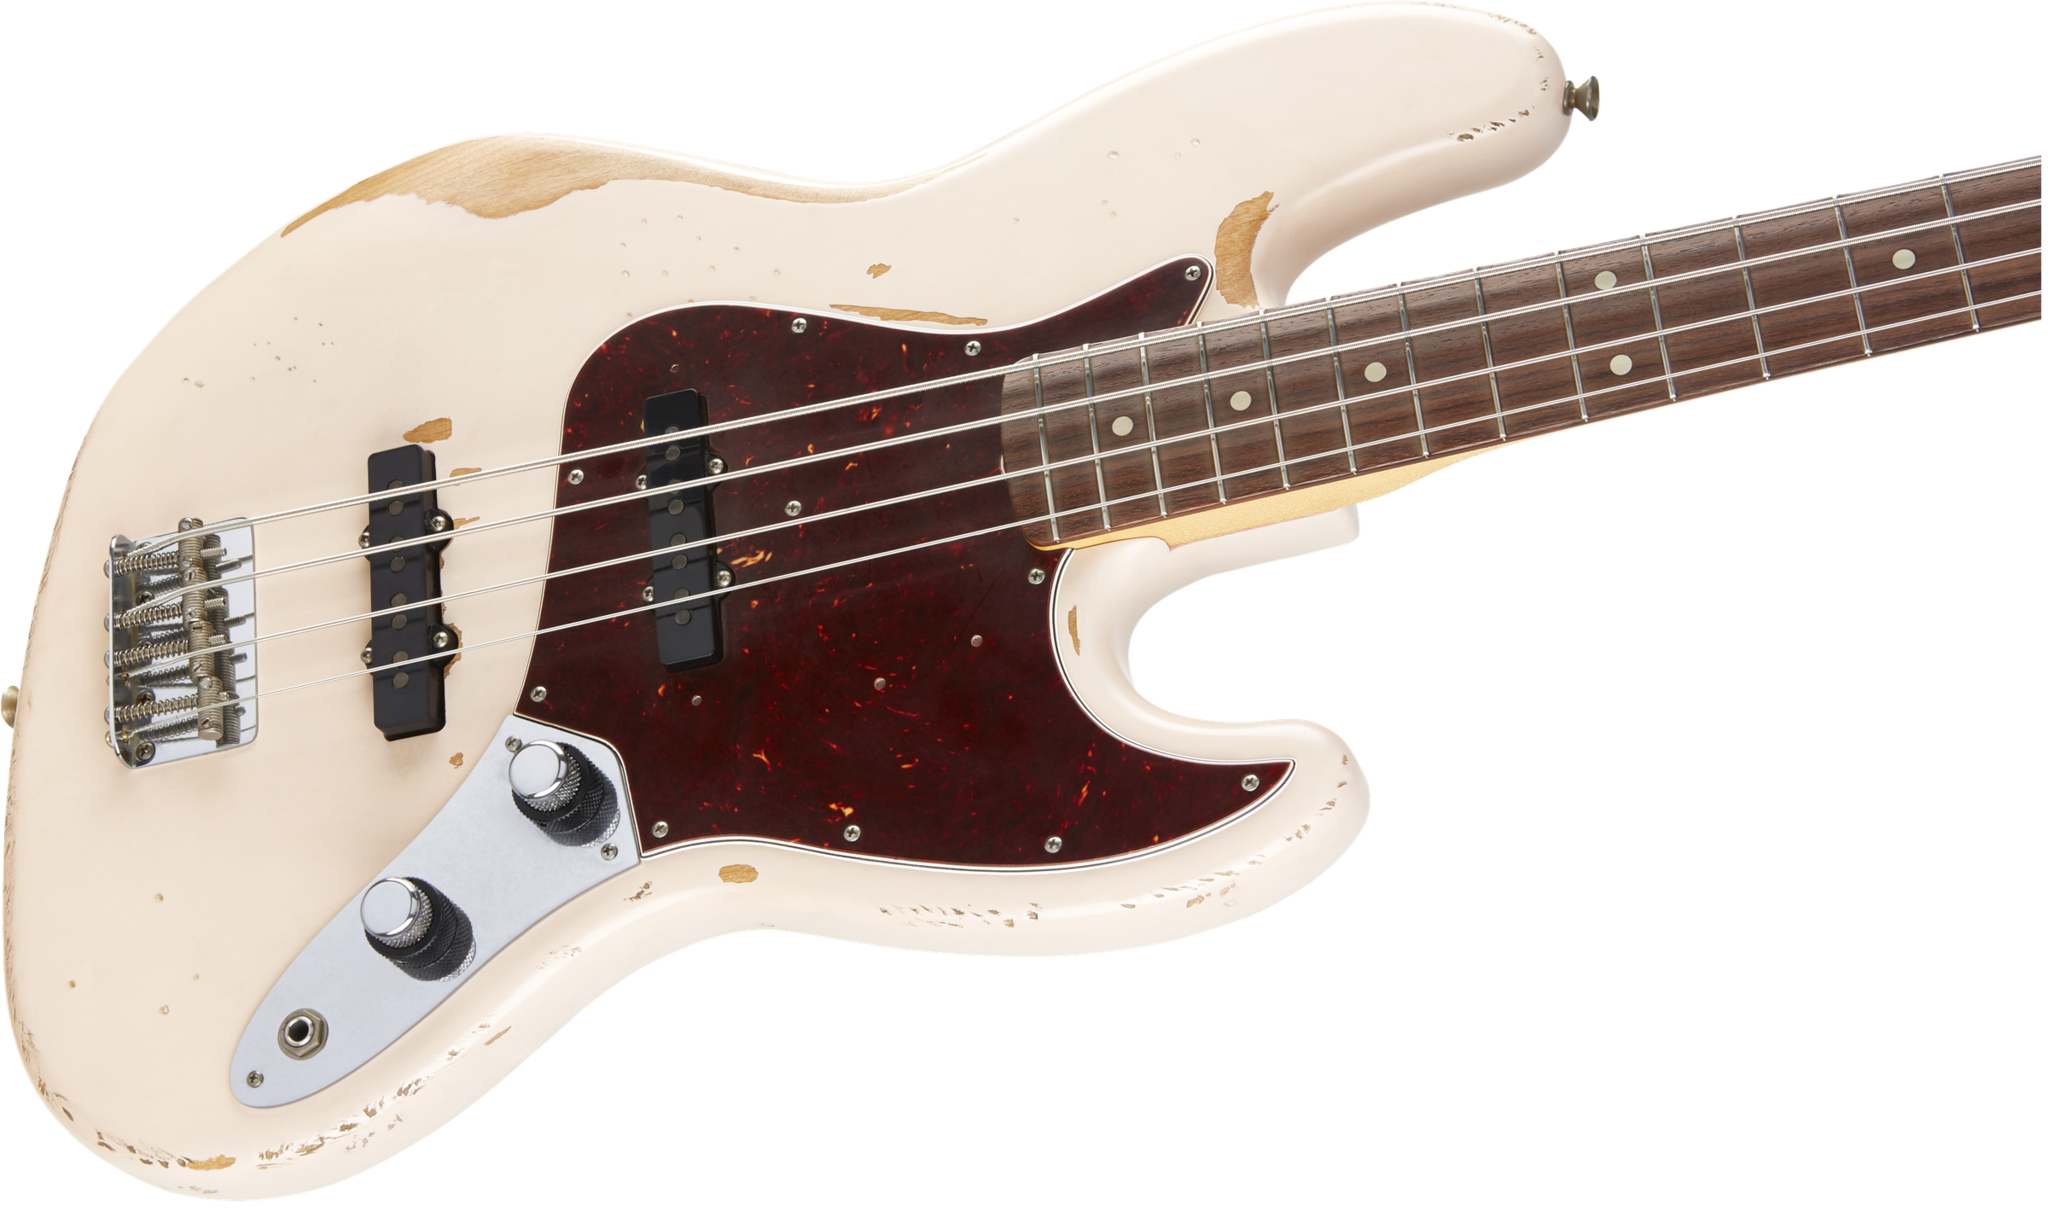 Fender Flea Jazz Bass, Rosewood Fingerboard, Roadworn Shell Pink 0141020356 - L.A. Music - Canada's Favourite Music Store!